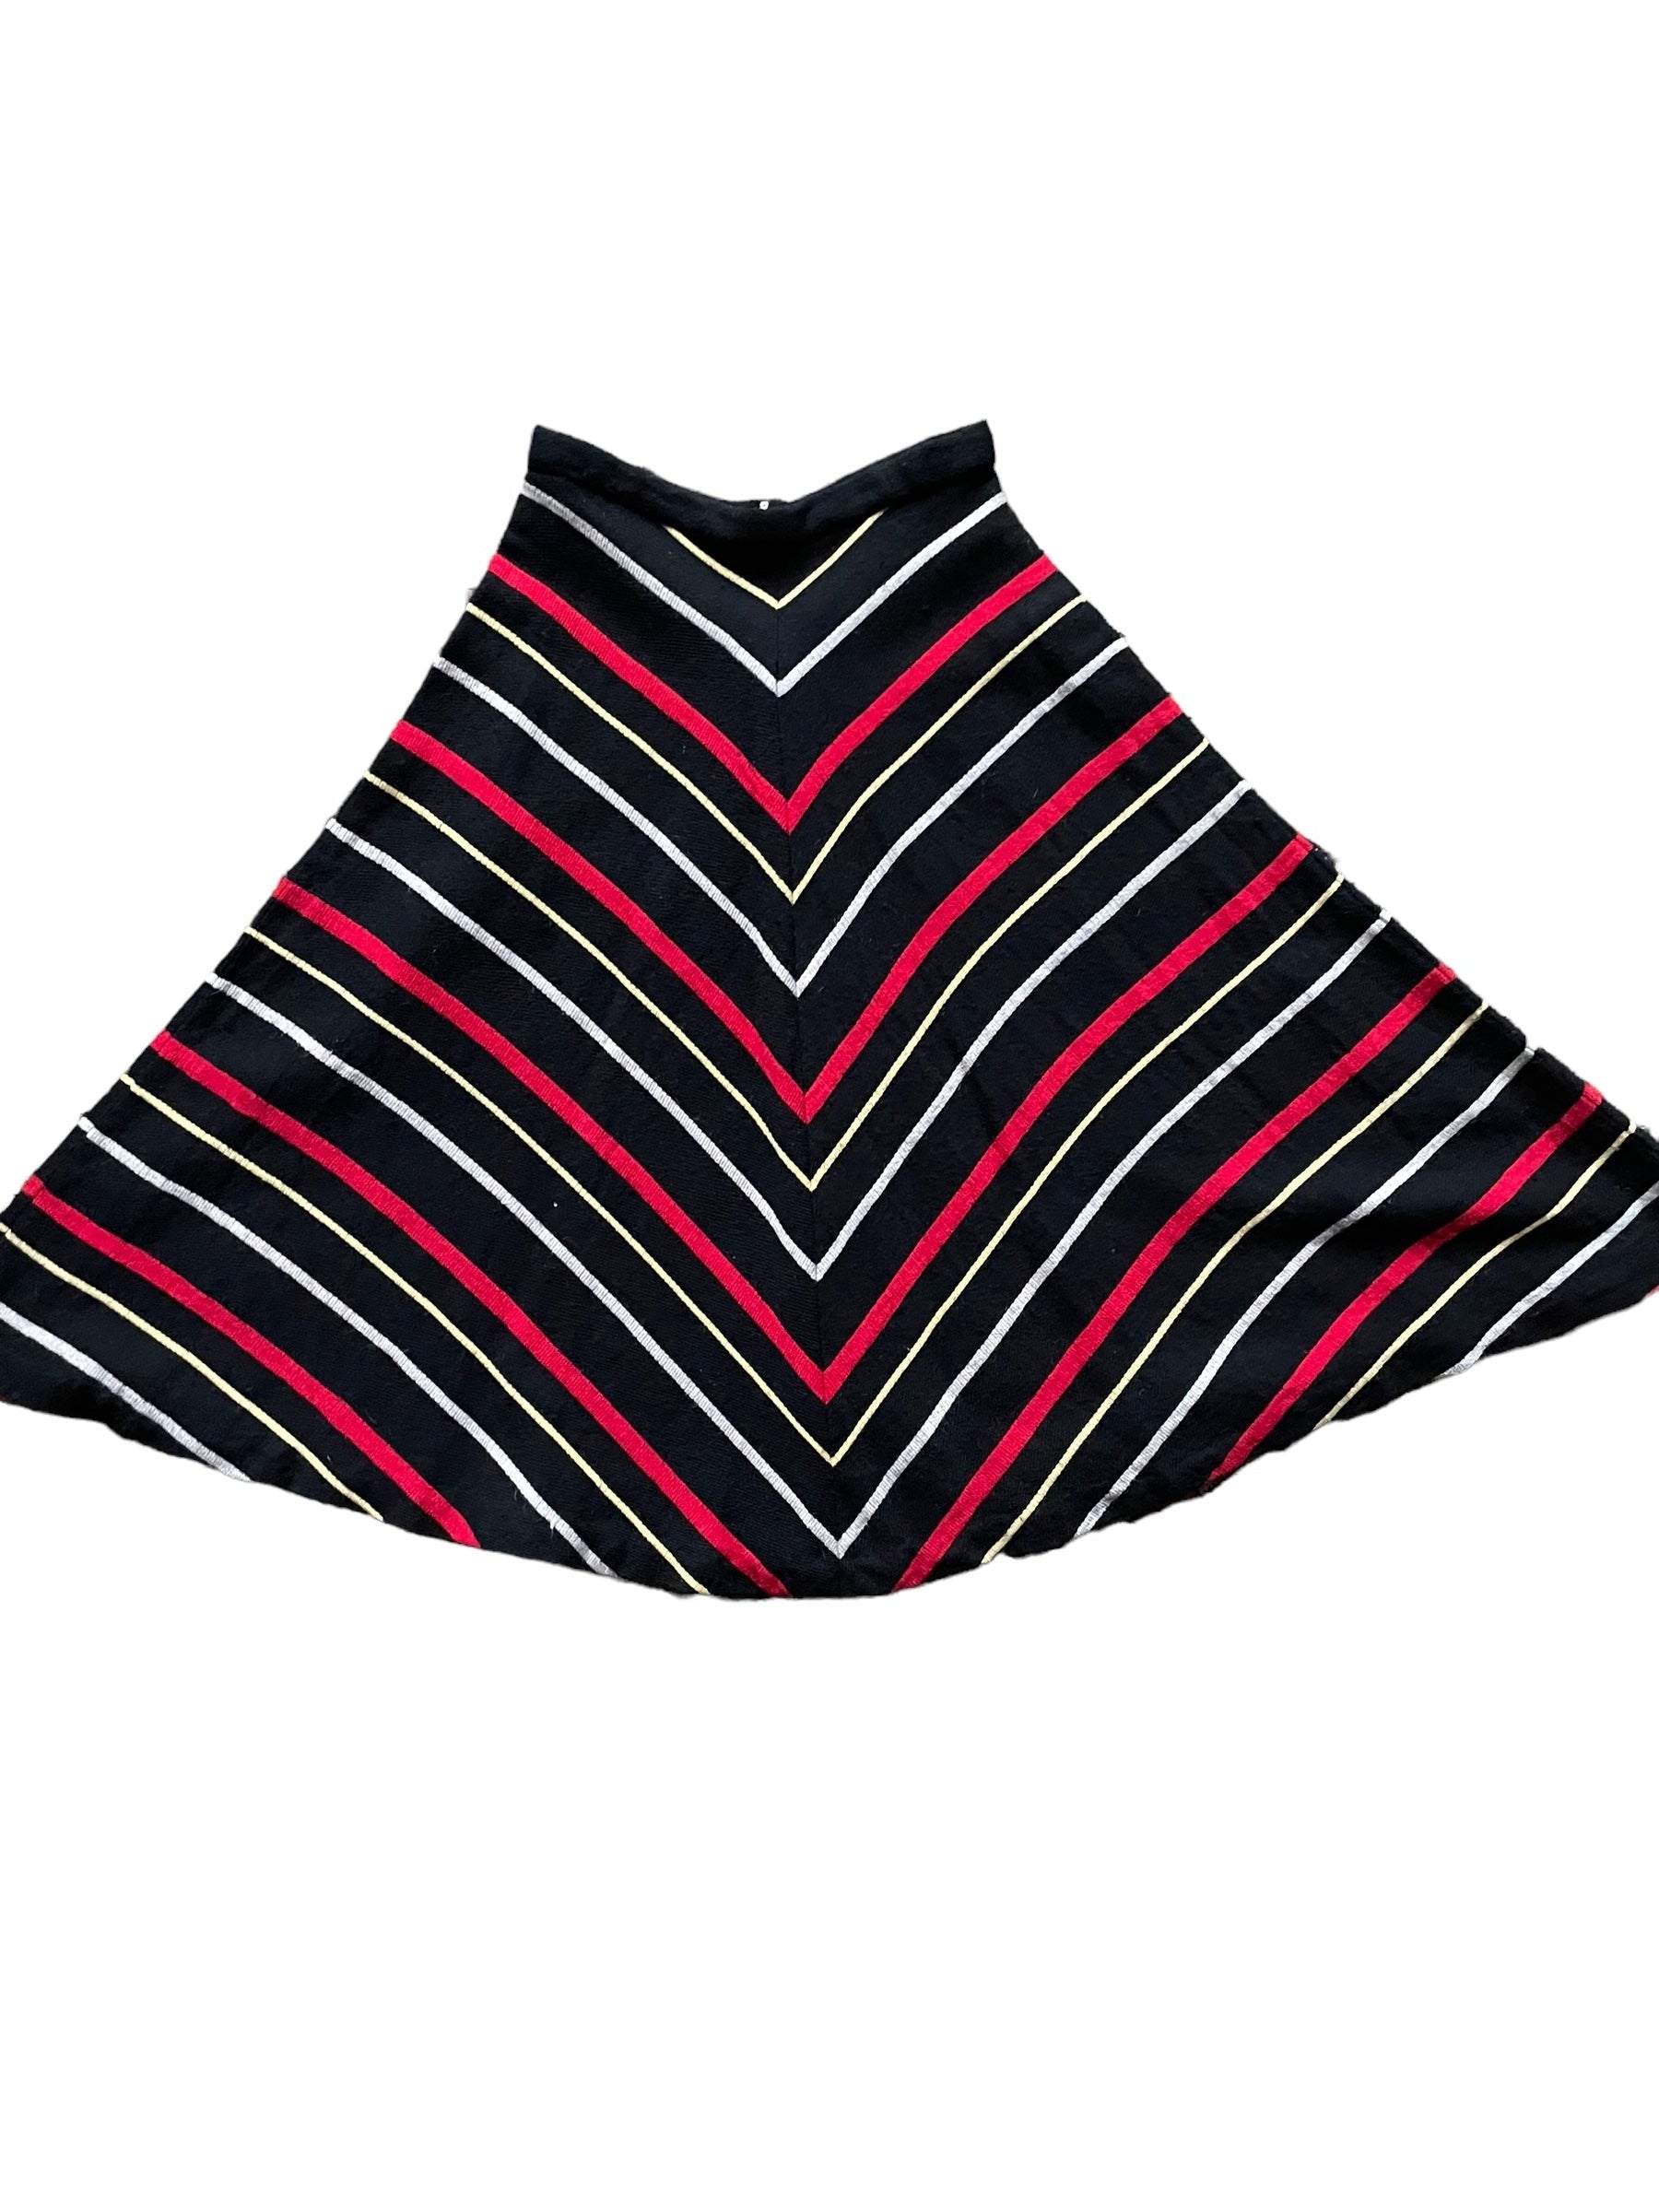 Full back view of Vintage 1940s Handmade Knit Chevron Skirt | Barn Owl Vintage Seattle | Ladies True Vintage Skirts